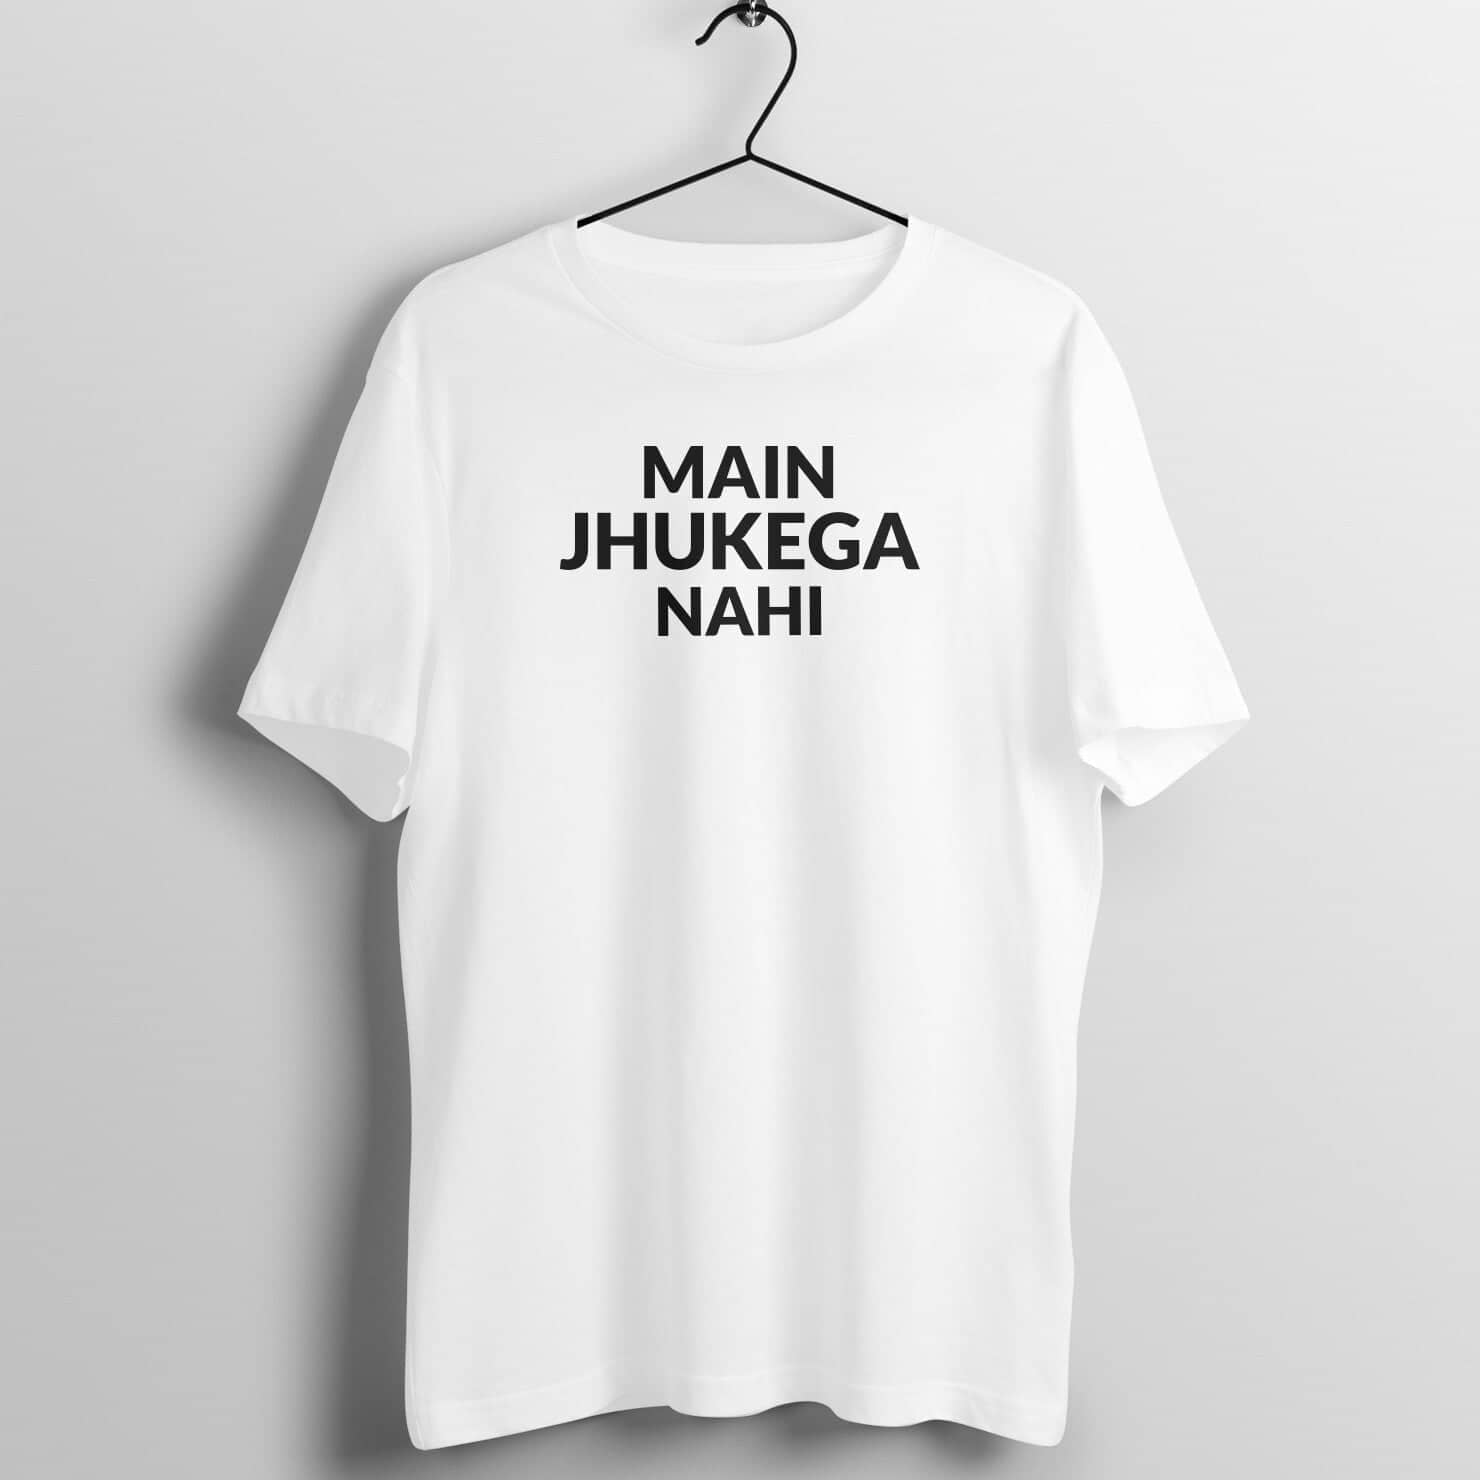 Main Jhukega Nahi Funny Swag T Shirt for Men freeshipping - Catch My Drift India